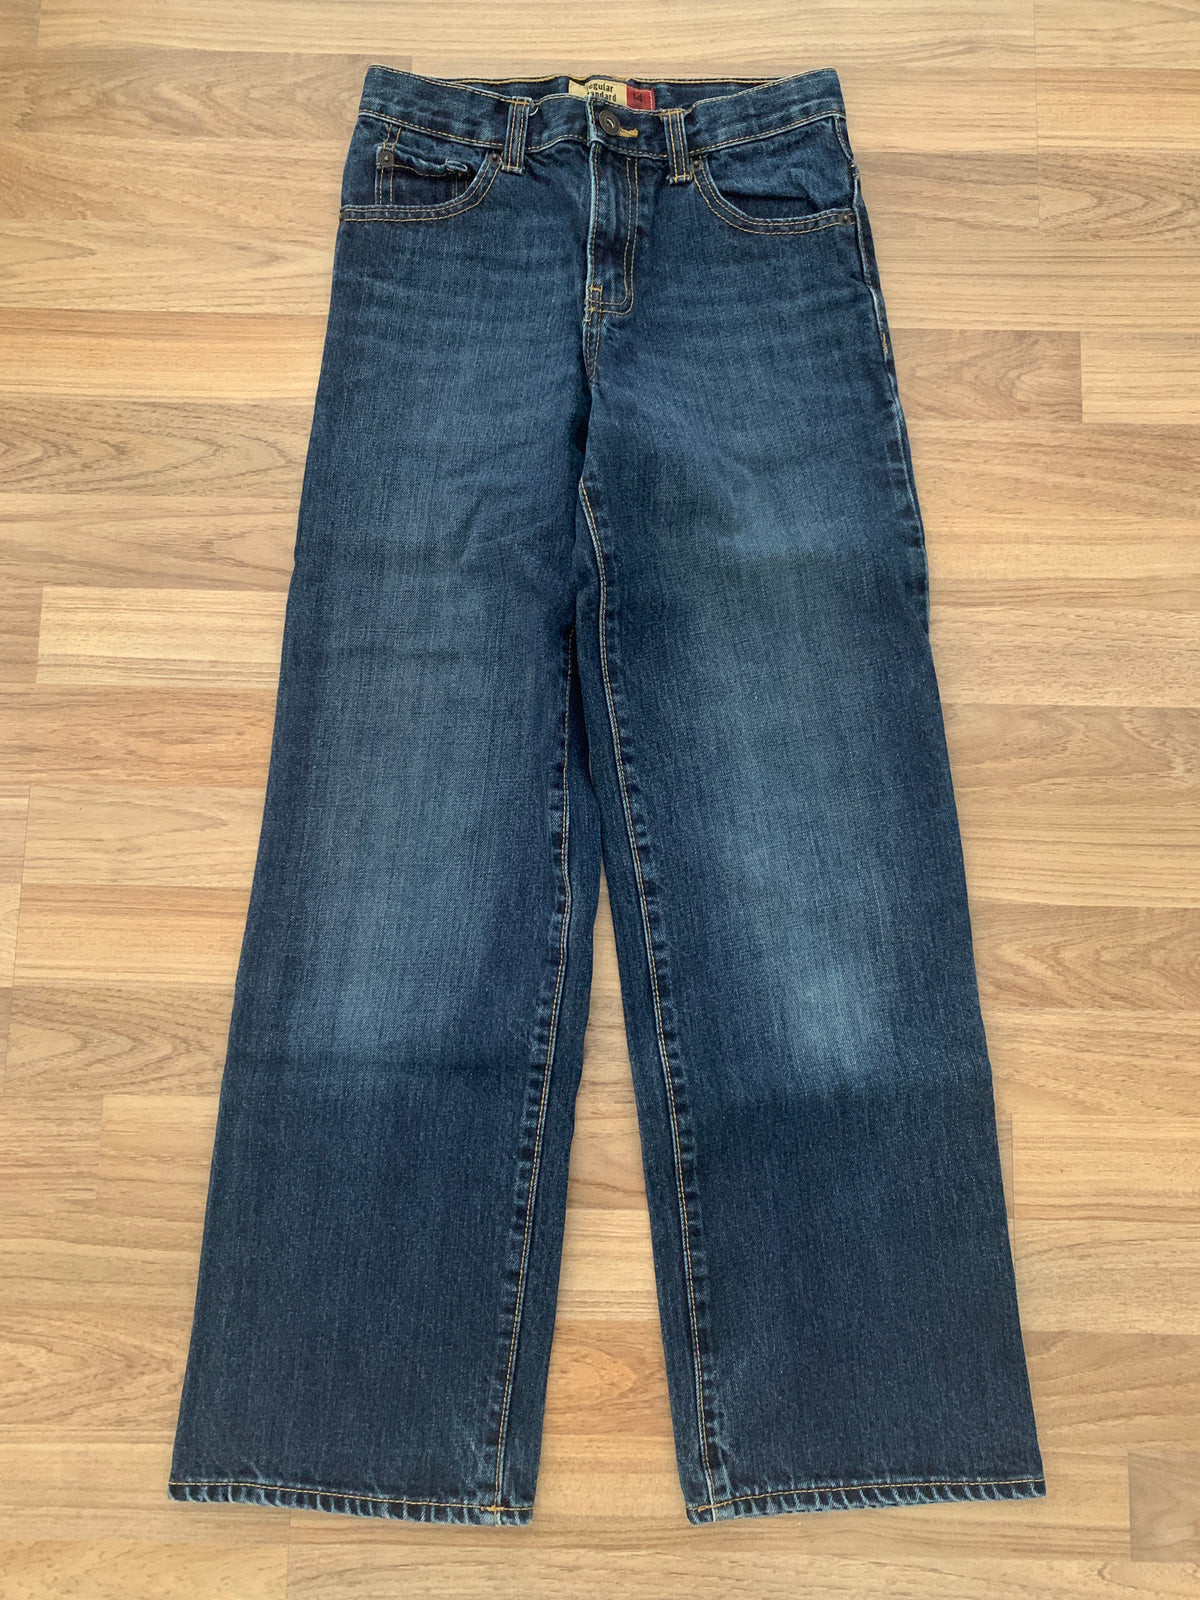 Jeans Regular Slim (Boys Size 14)